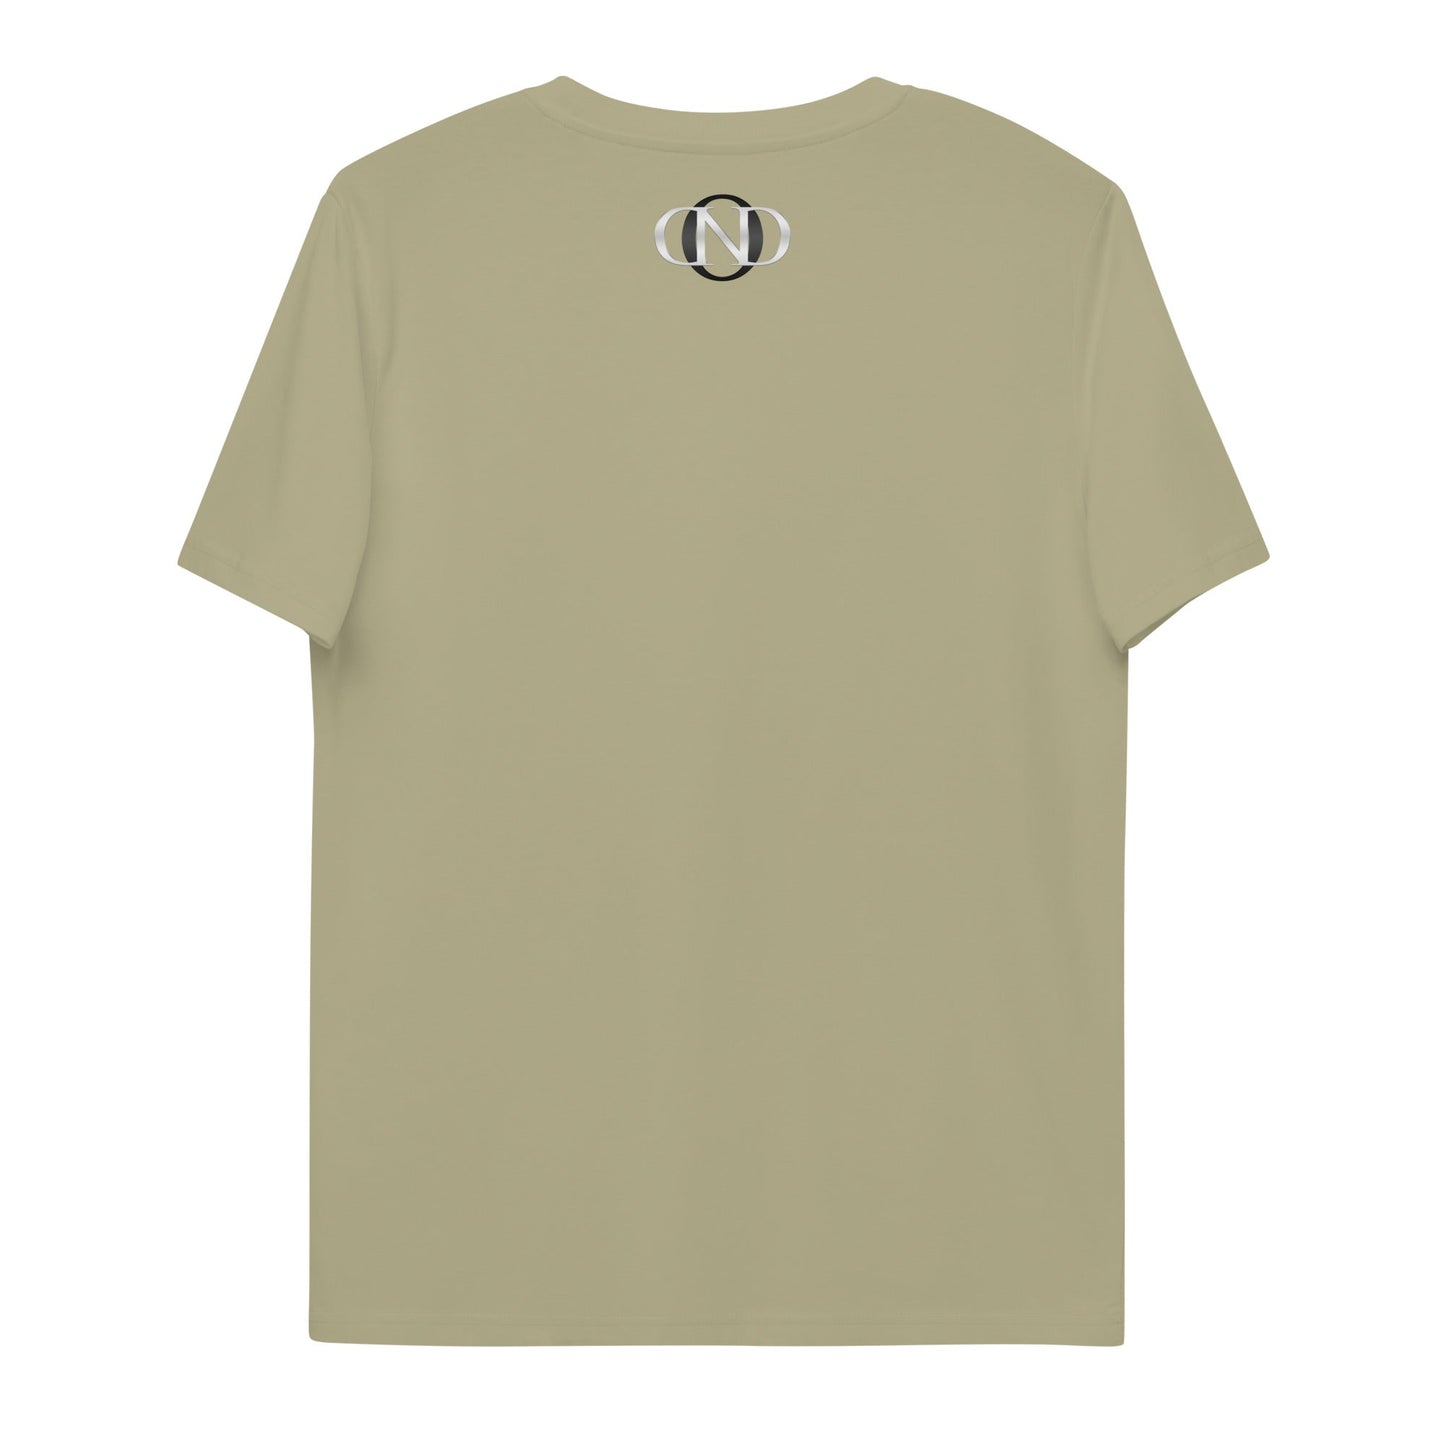 19 Neduz Designs Unisex Socialliberalerna Plain T-Shirt -